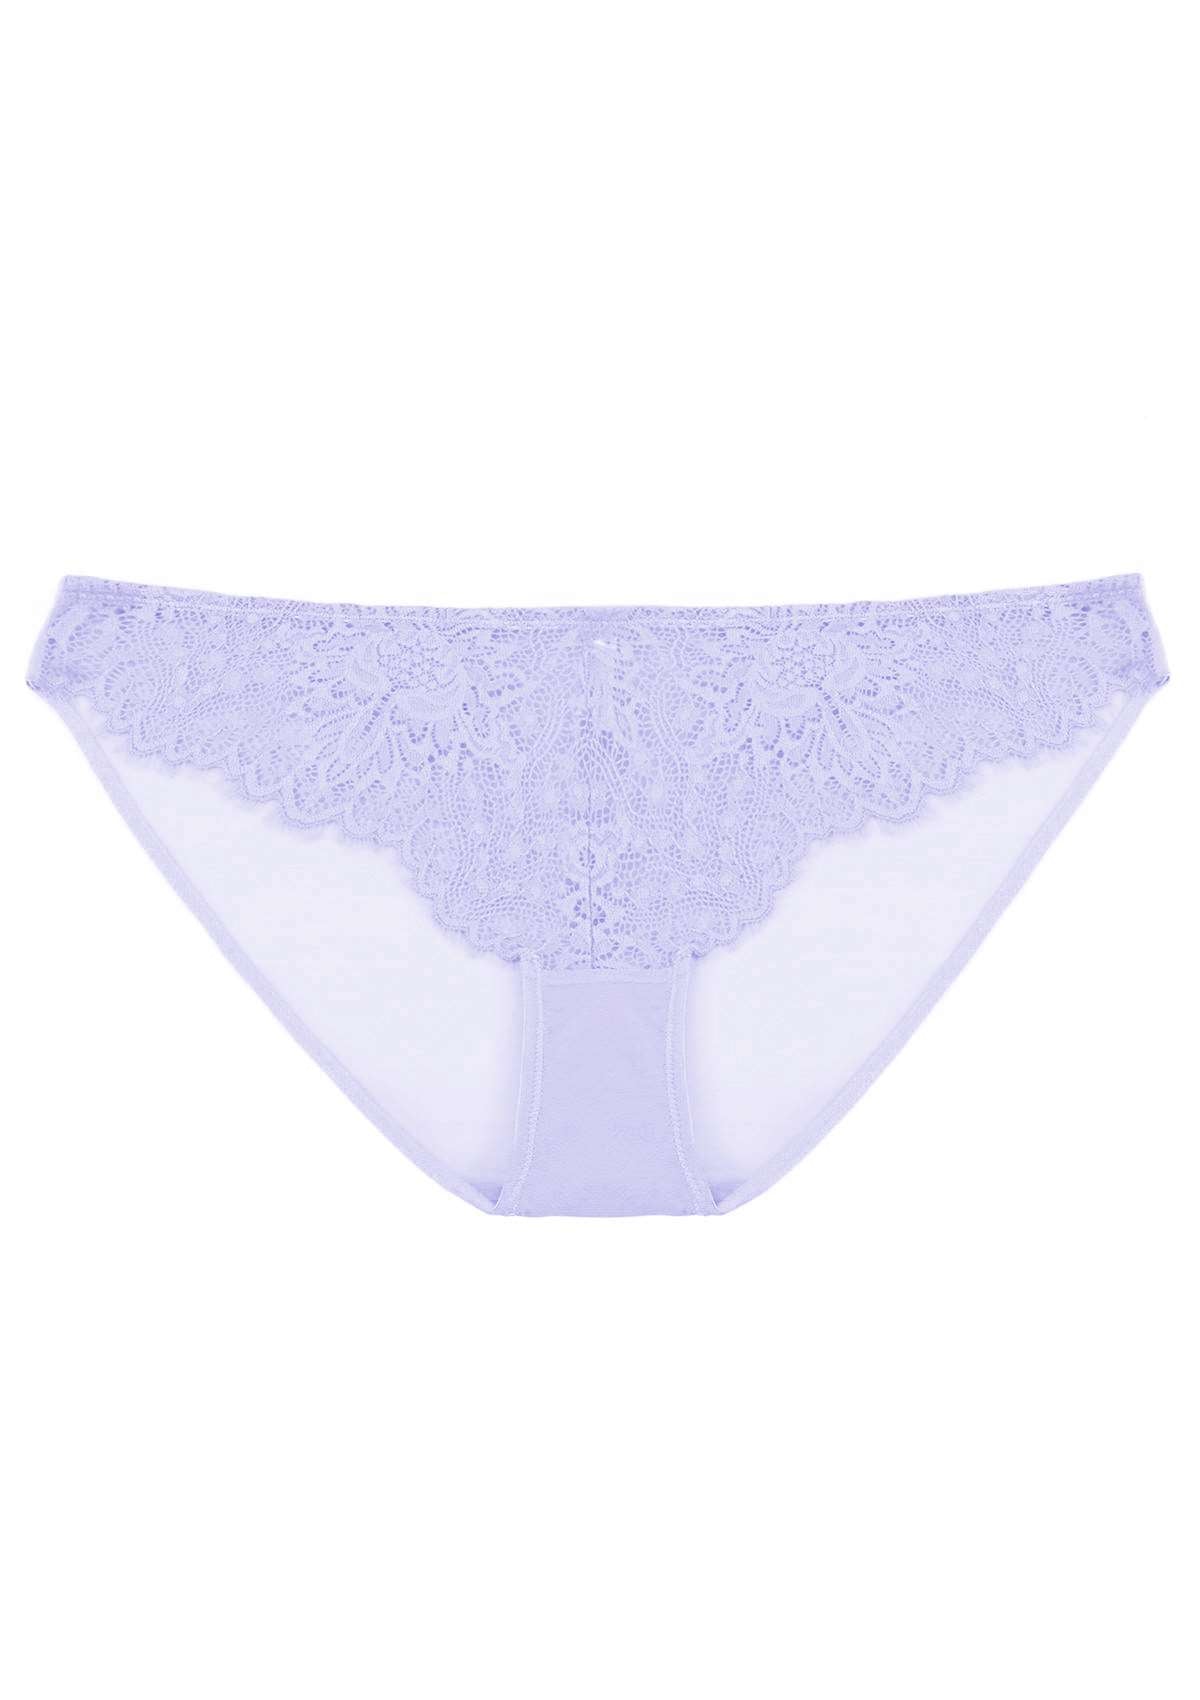 HSIA Sunflower Exquisite Lace Bikini Underwear - M / White